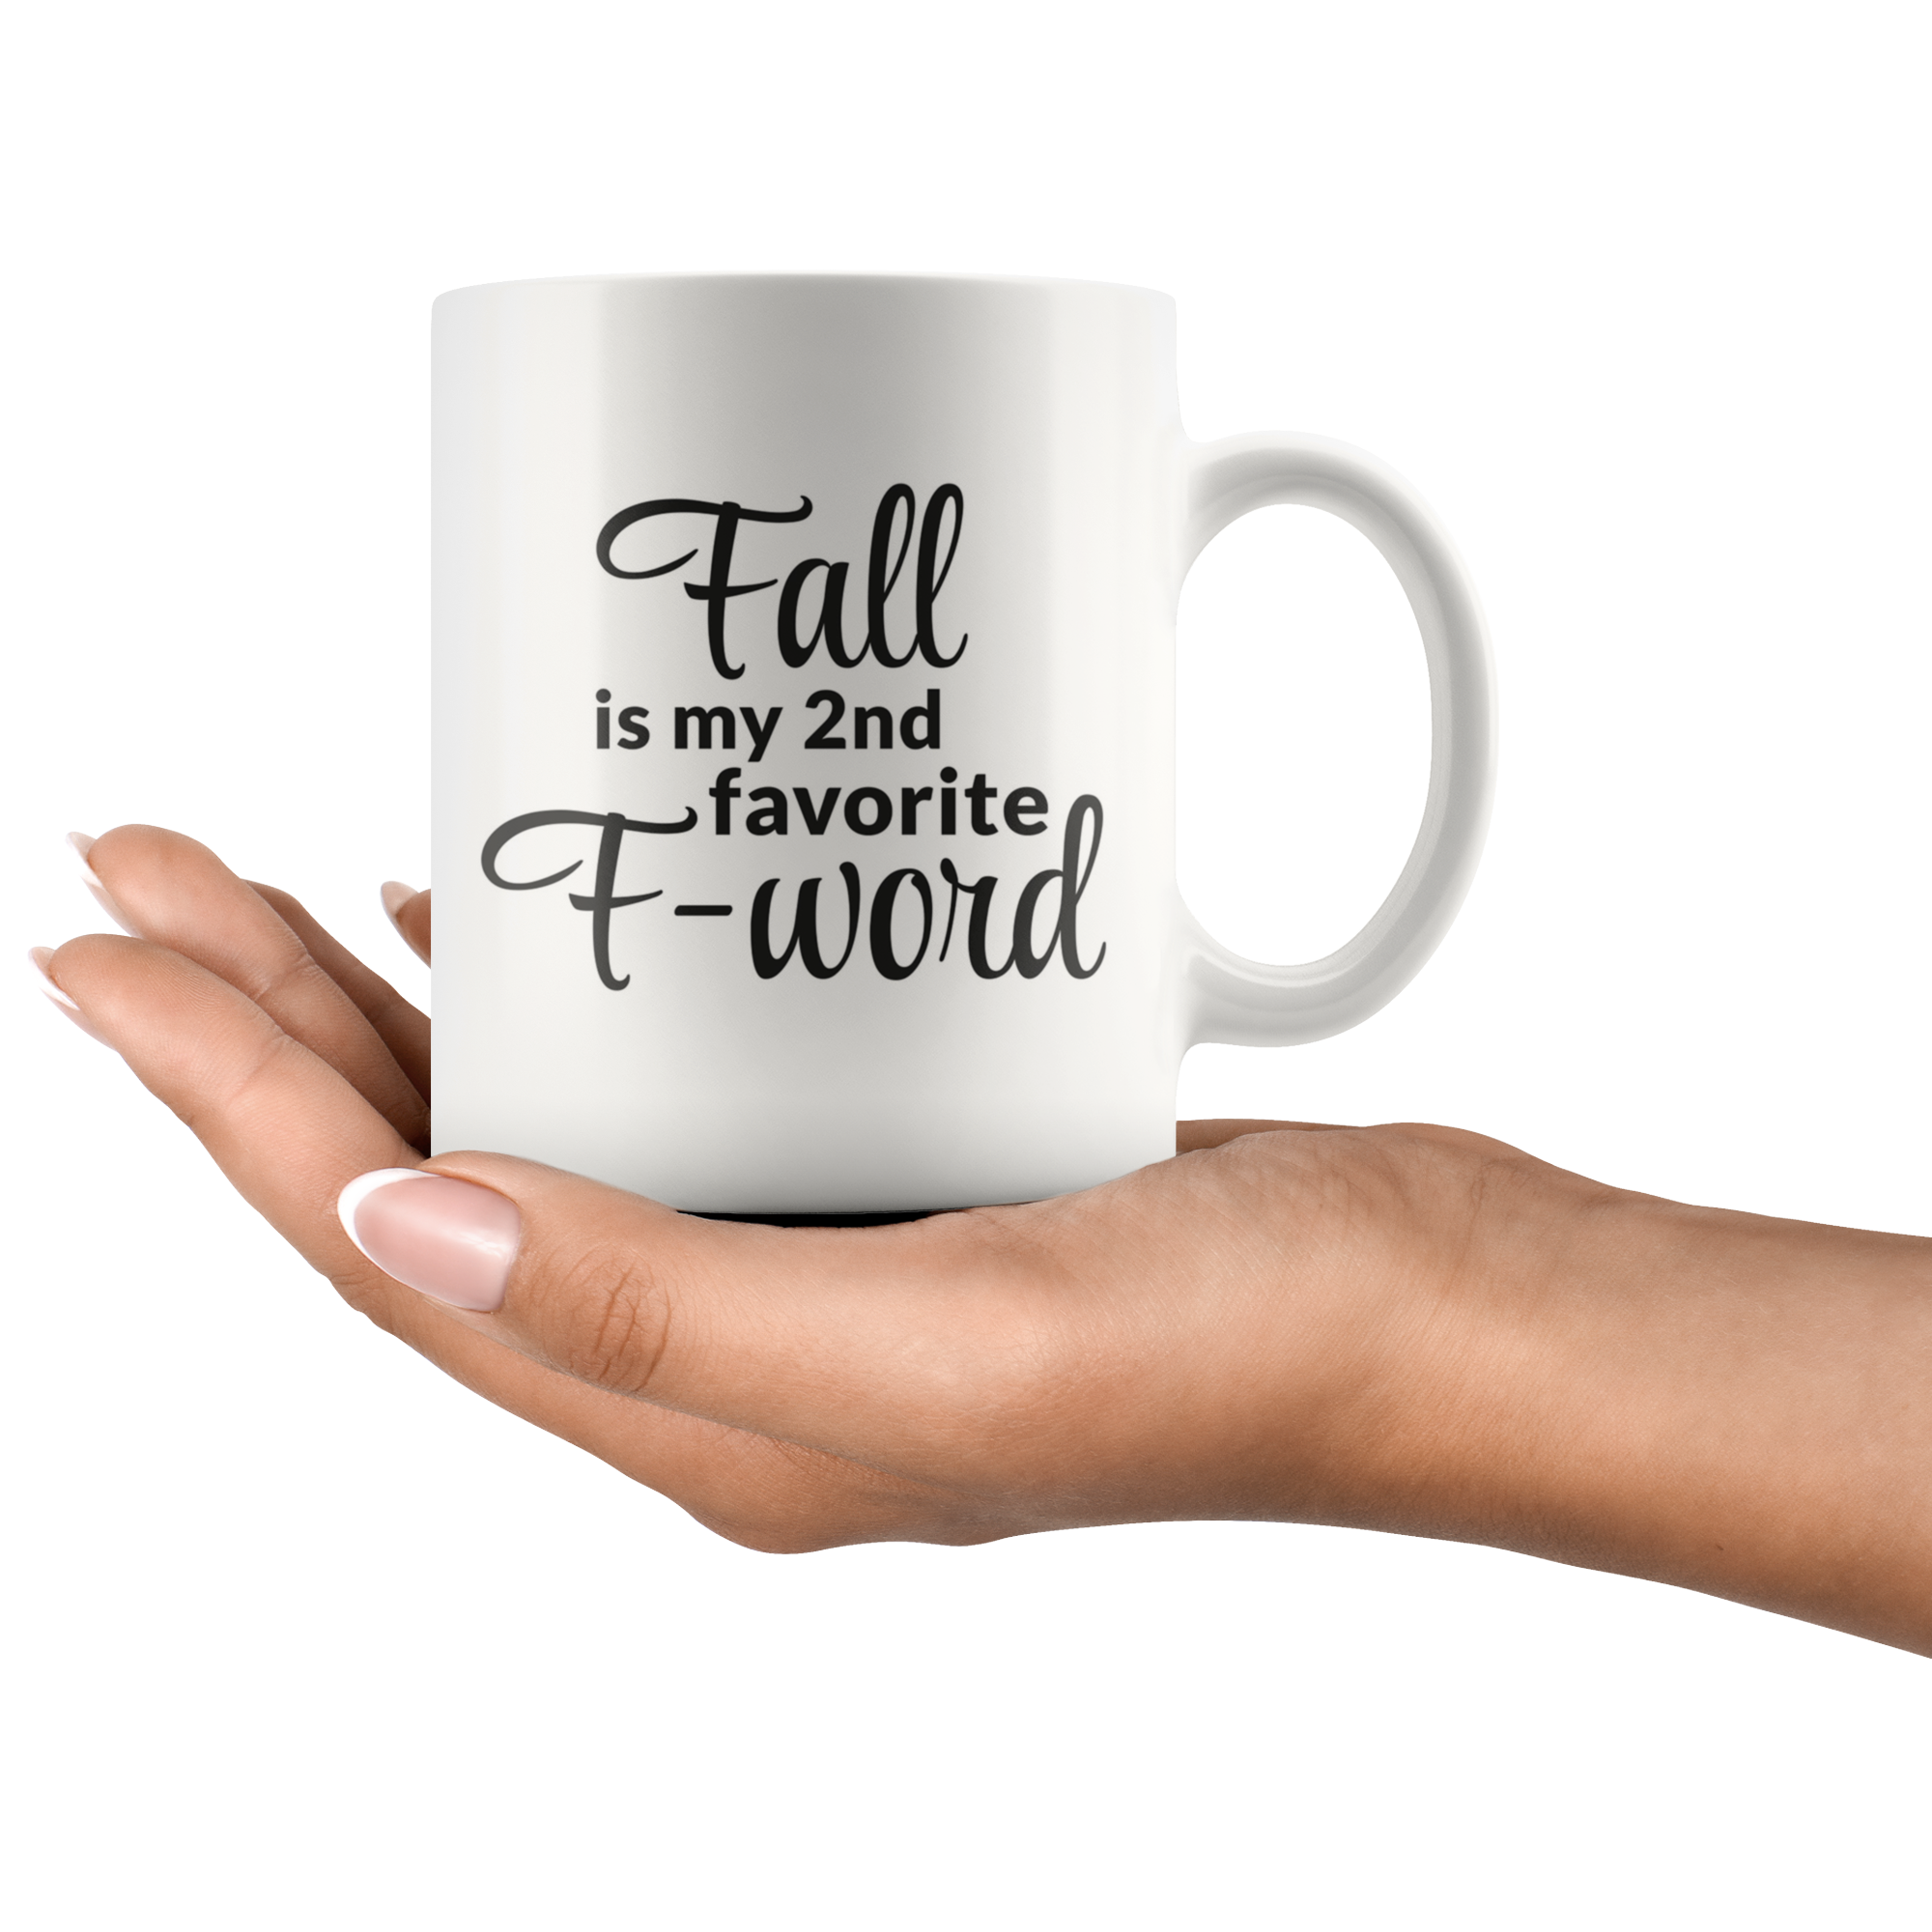 Favorite F- Word Coffee Mug